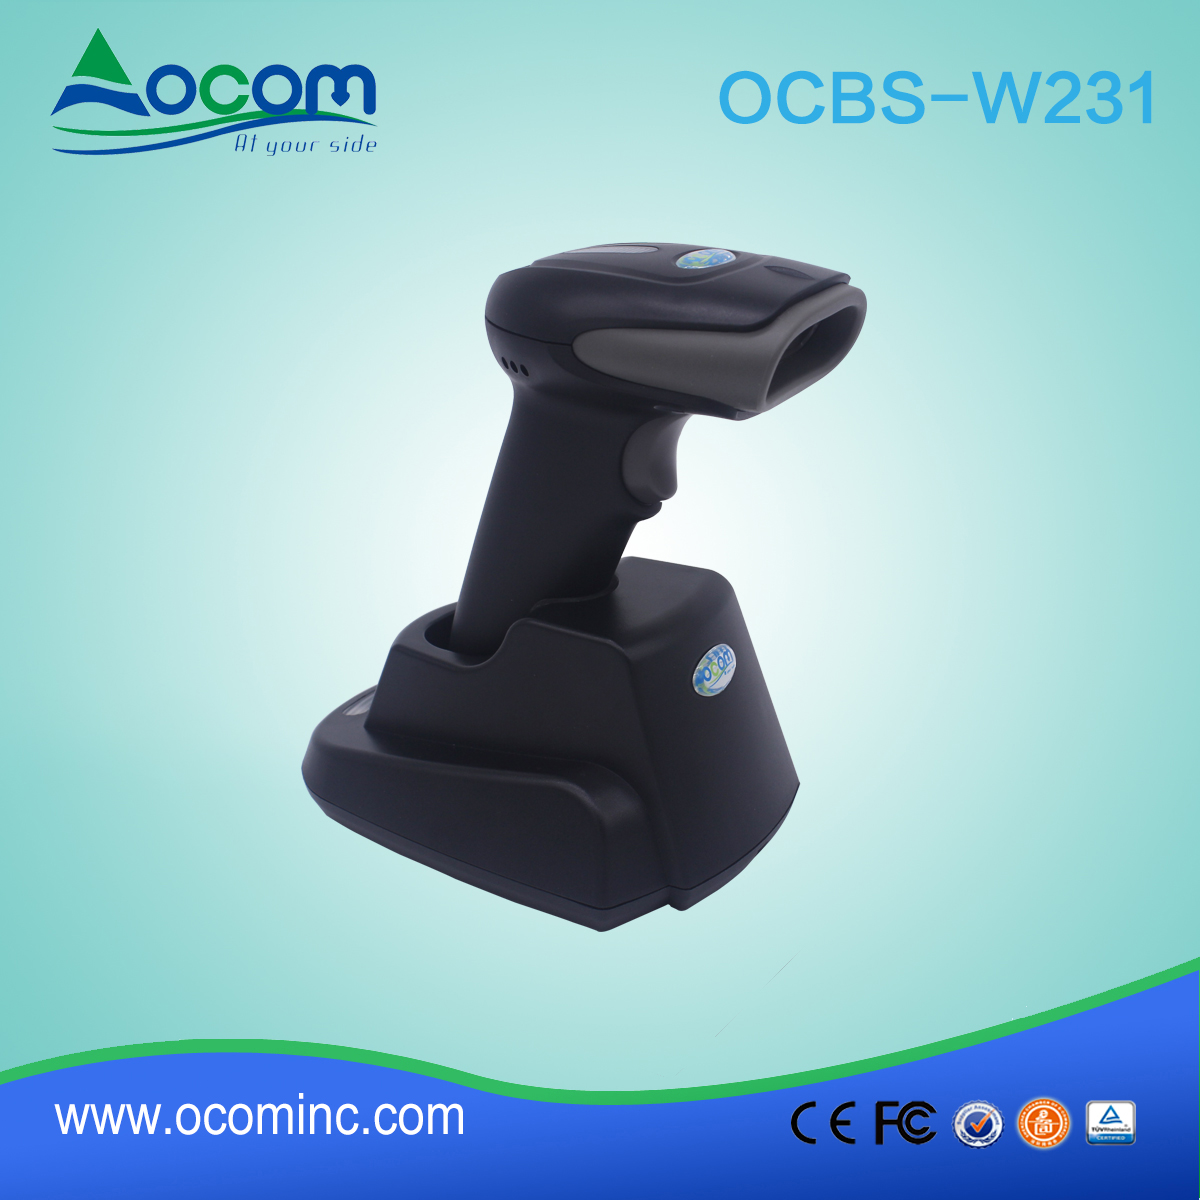 OCBS-W231 palmare Bluetooth USB Barcode scanner per inventario